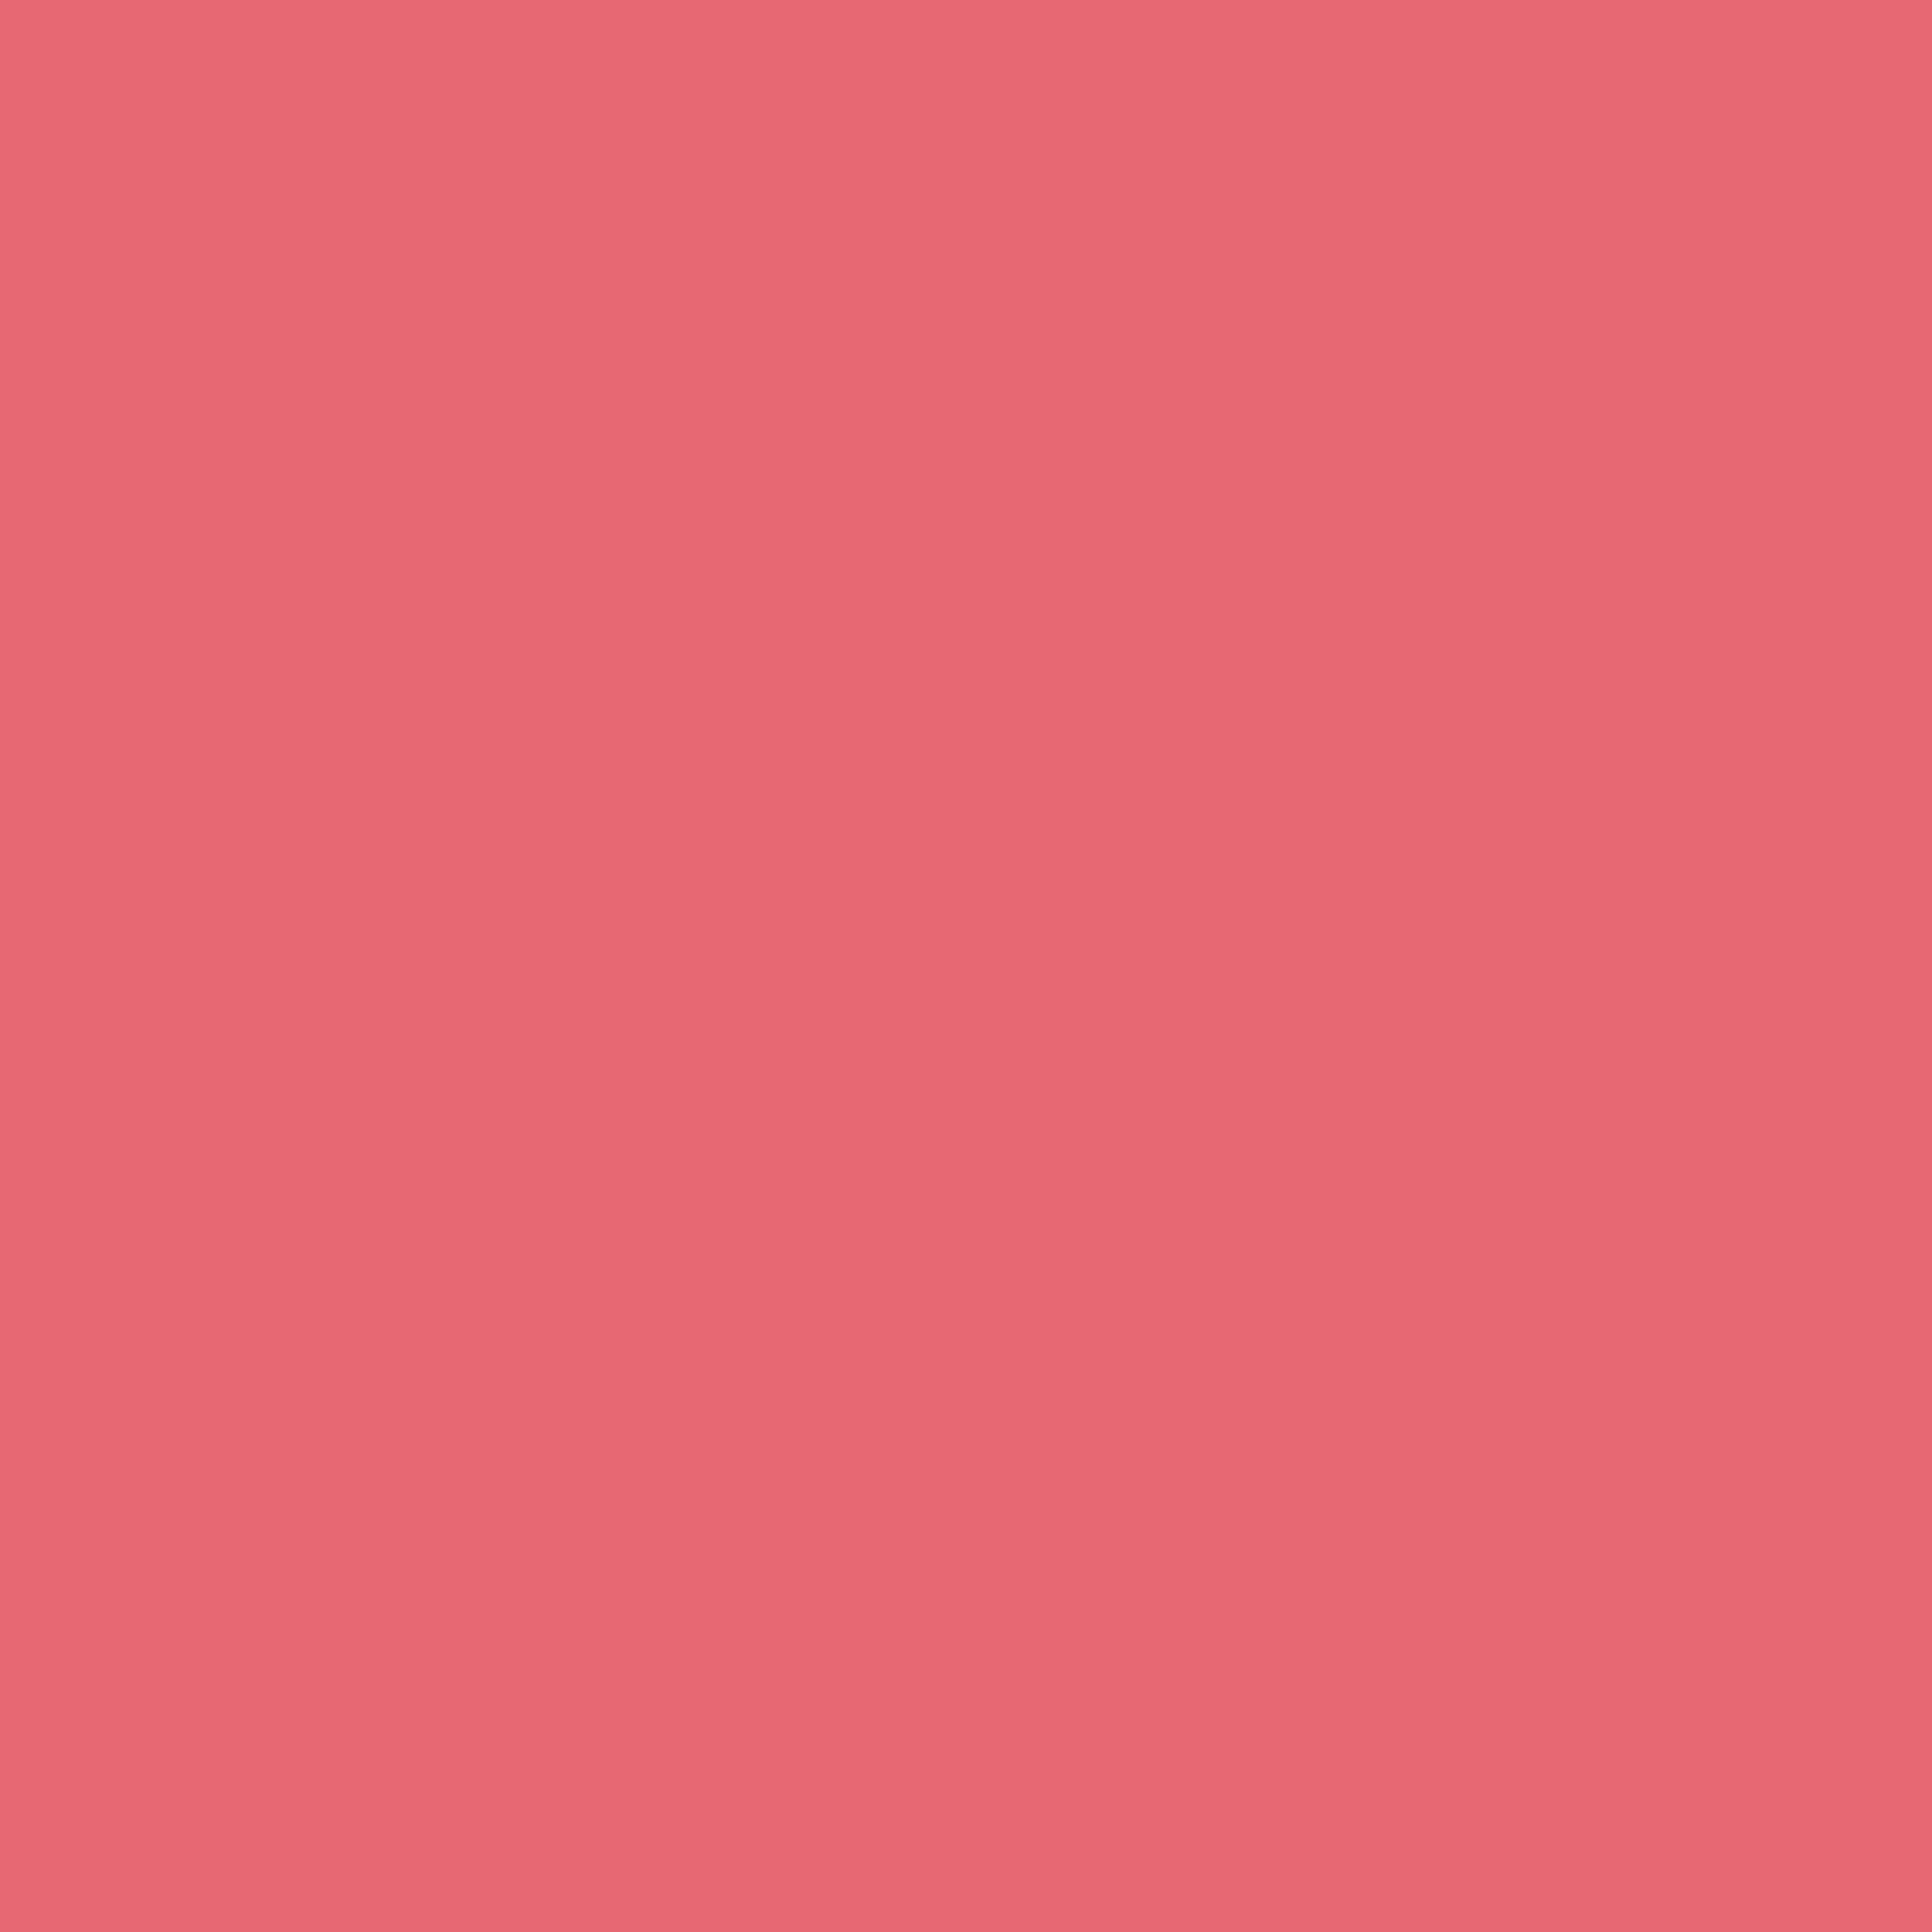 2732x2732 Light Carmine Pink Solid Color Background